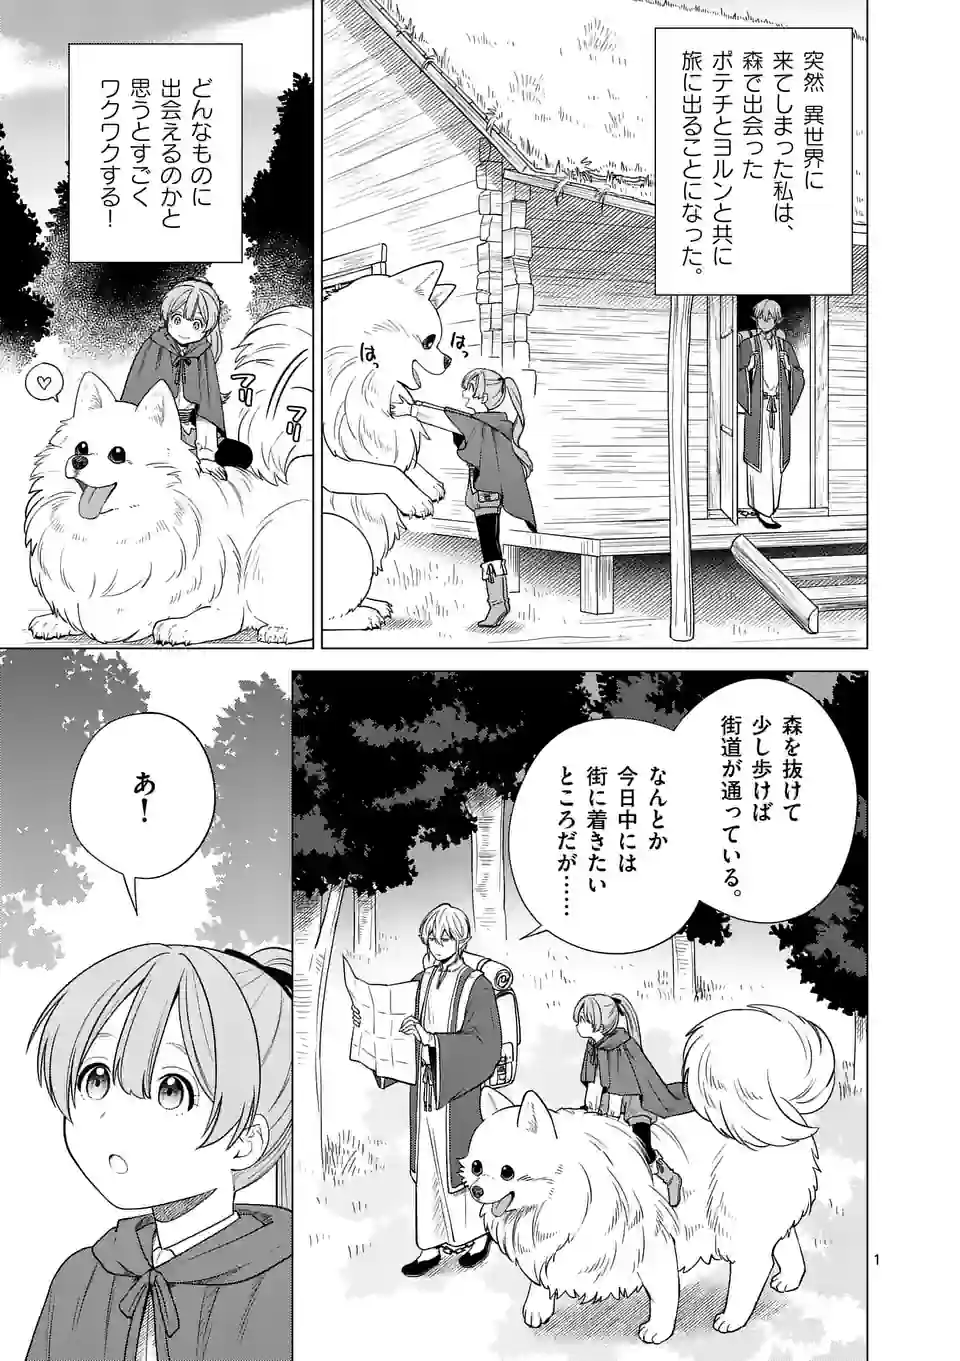 Isekai Pomeranian to Niji no Mofumofu Tabi - Chapter 3 - Page 1